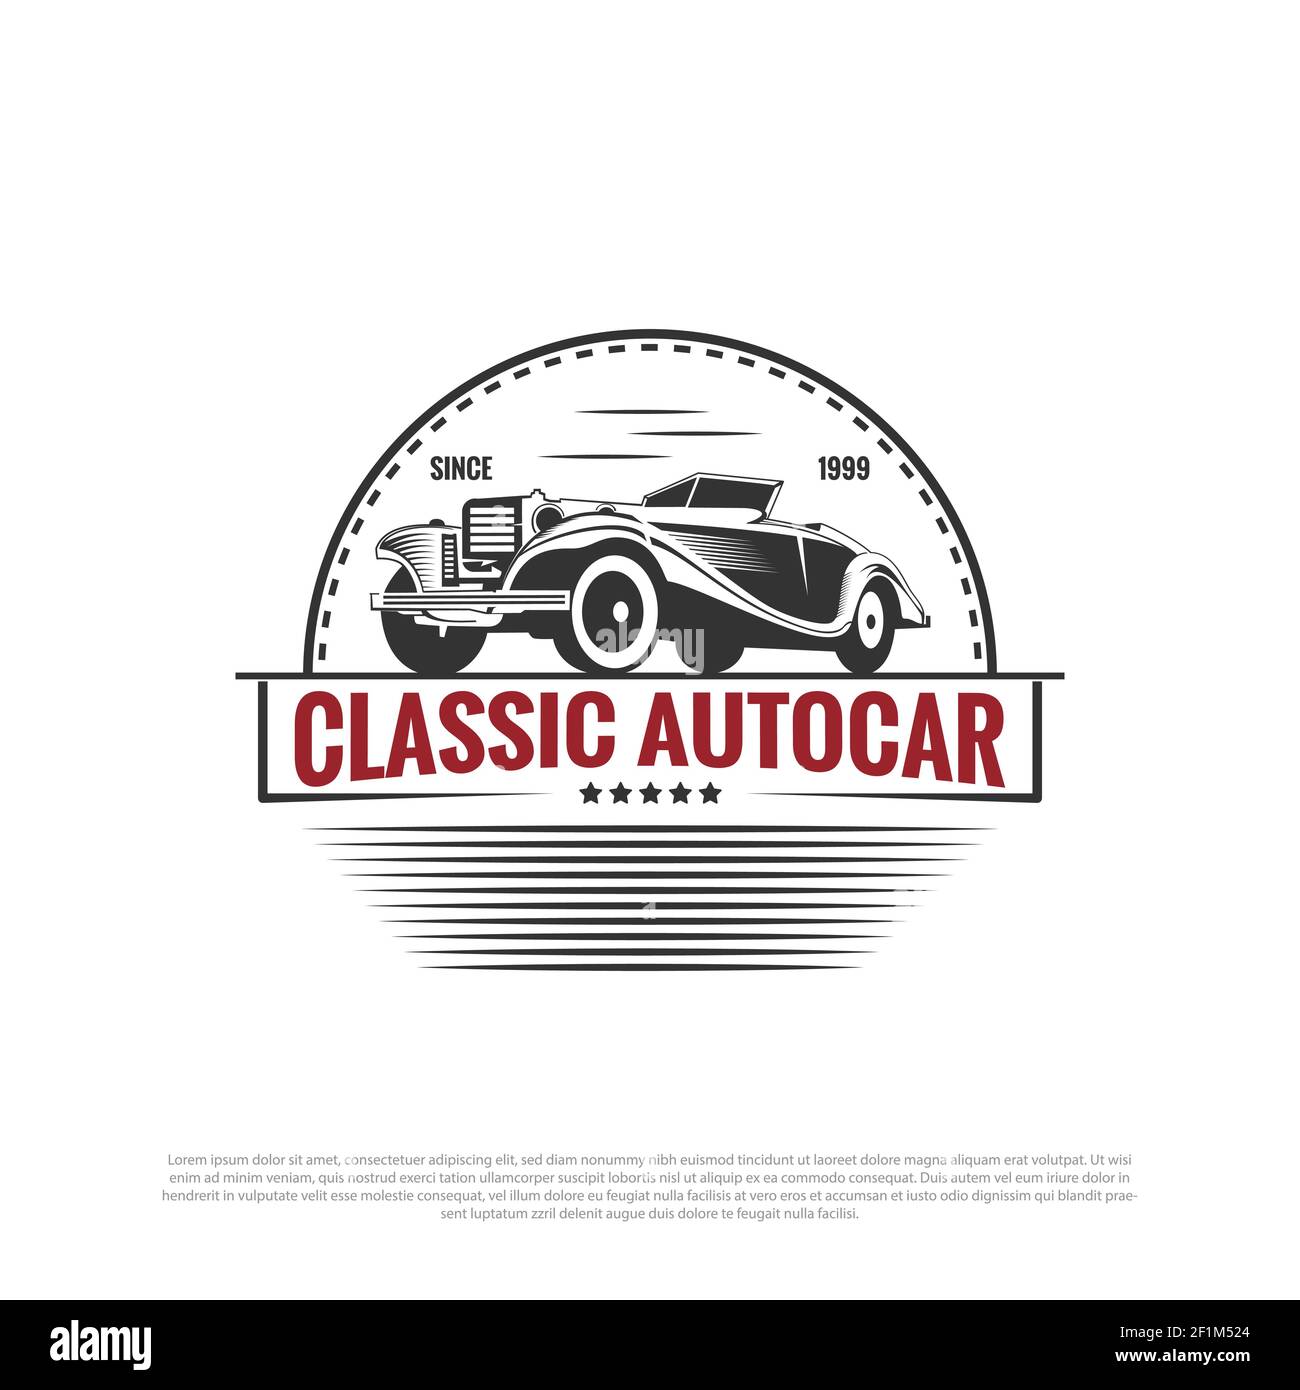 classic car logo design vector, vintage automotive car restoration and car club design idea with vintage and retro style Stock Vector